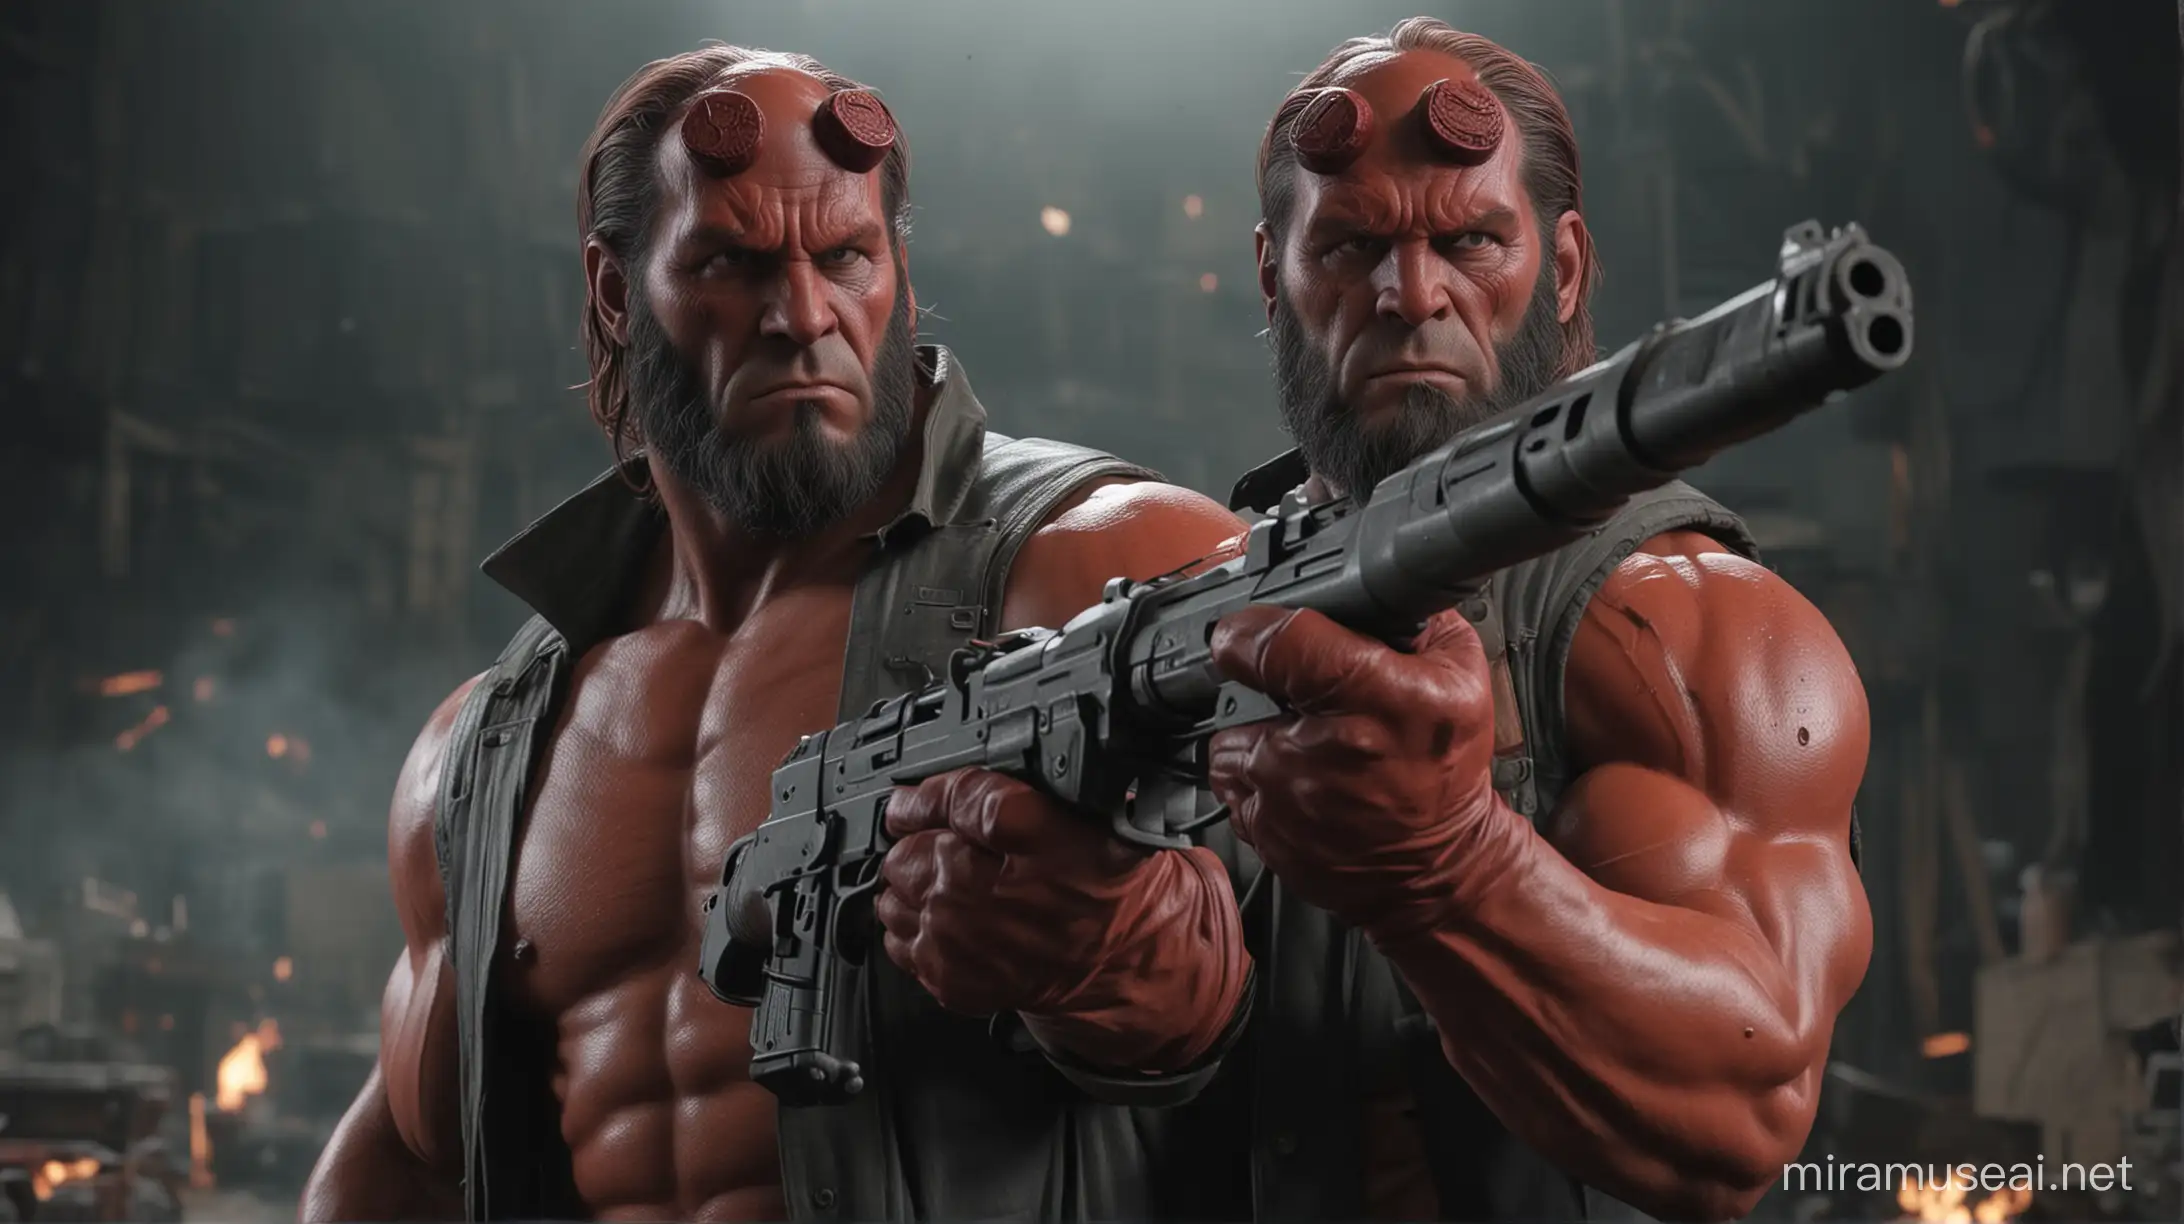 Muscular Hellboy with Gun in Fiery Background